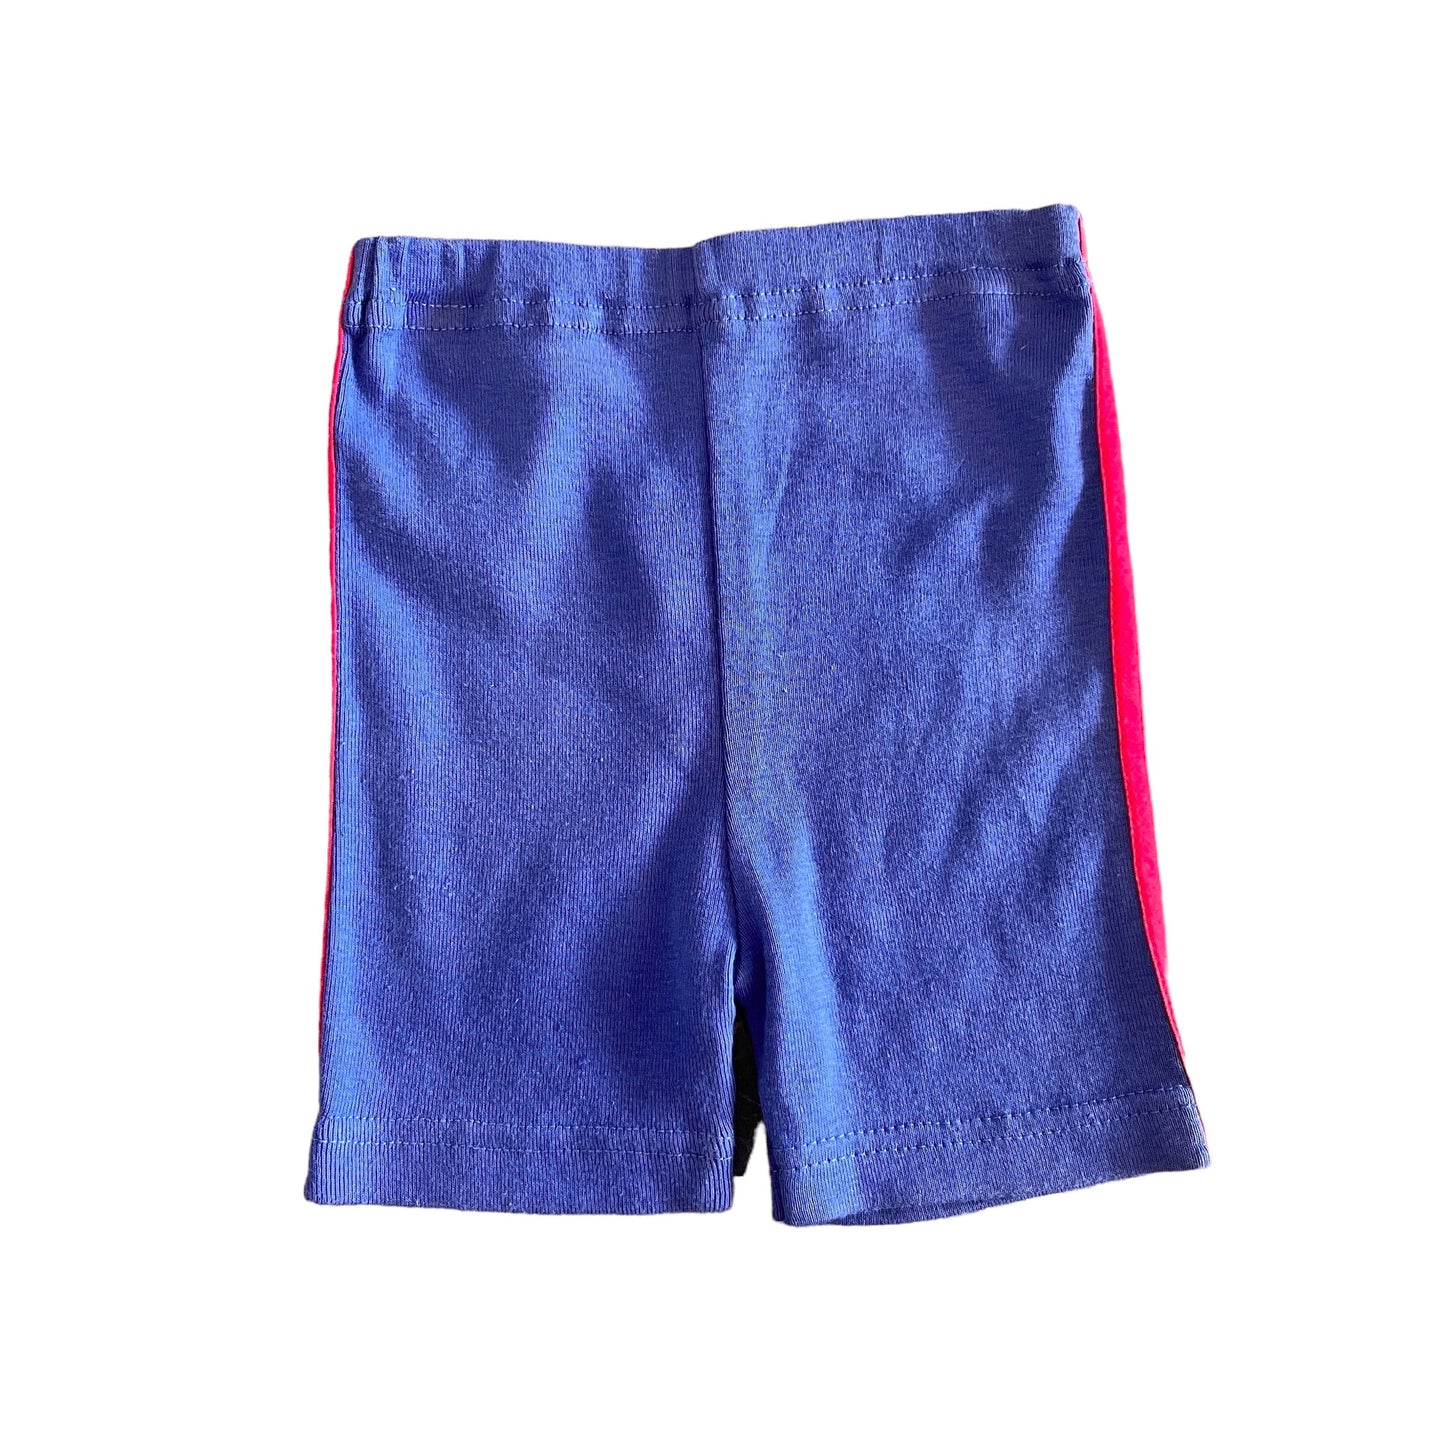 Vintage 1970's Blue / Red Shorts 0-3M